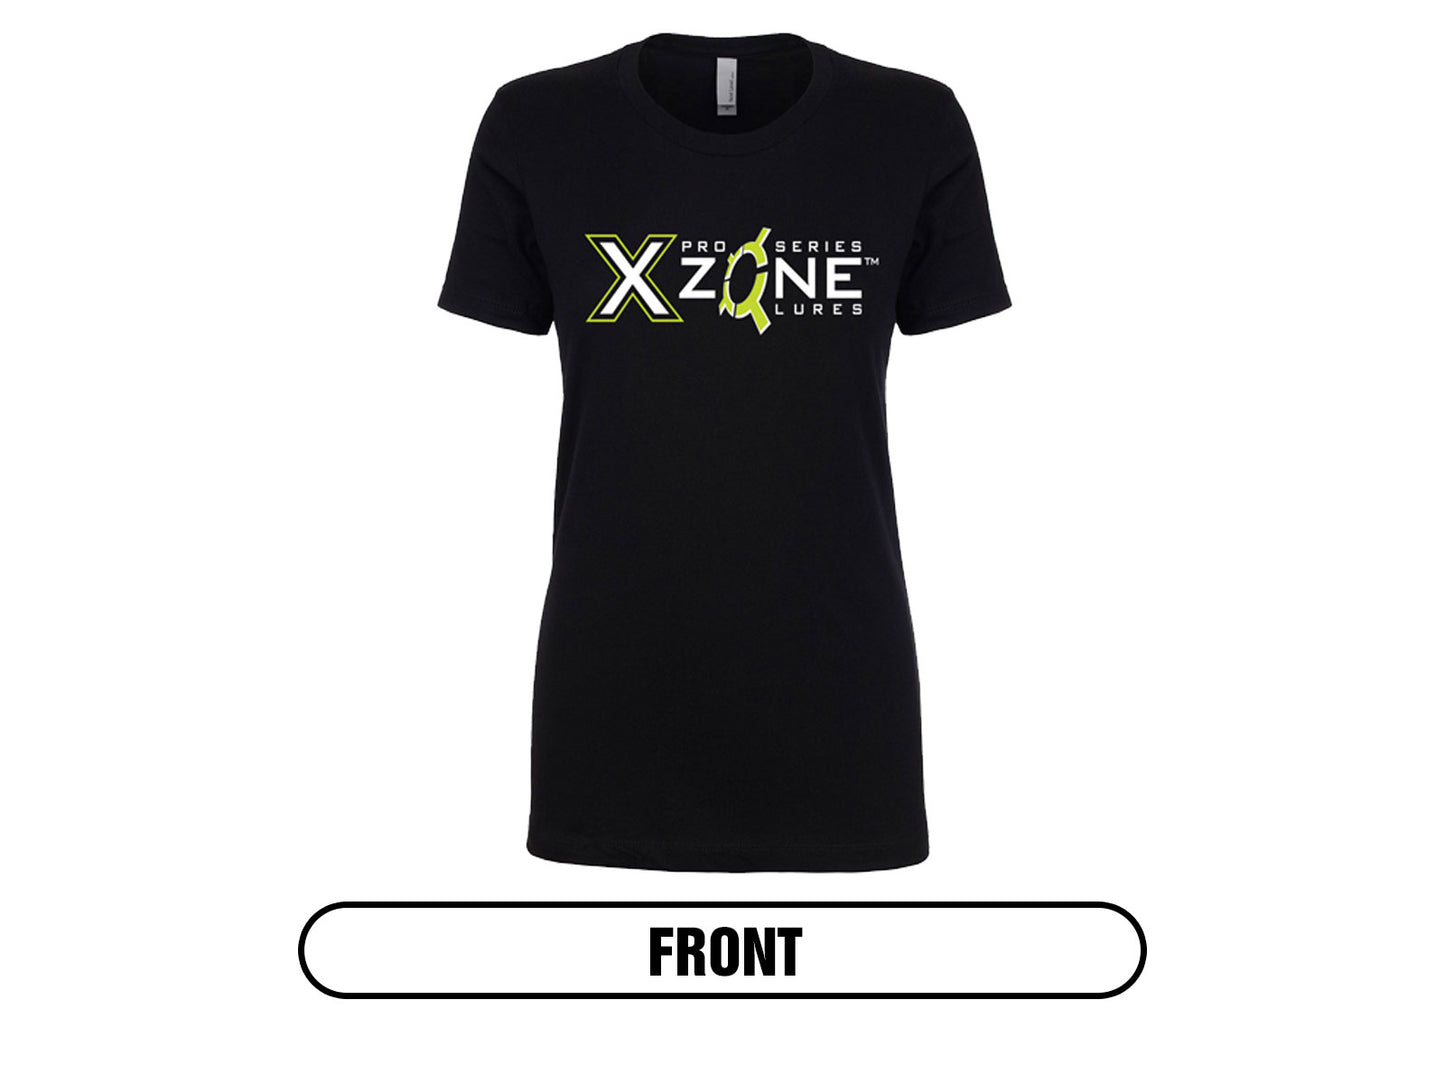 X Zone Lures Branded T-Shirt Ladies Womens Black